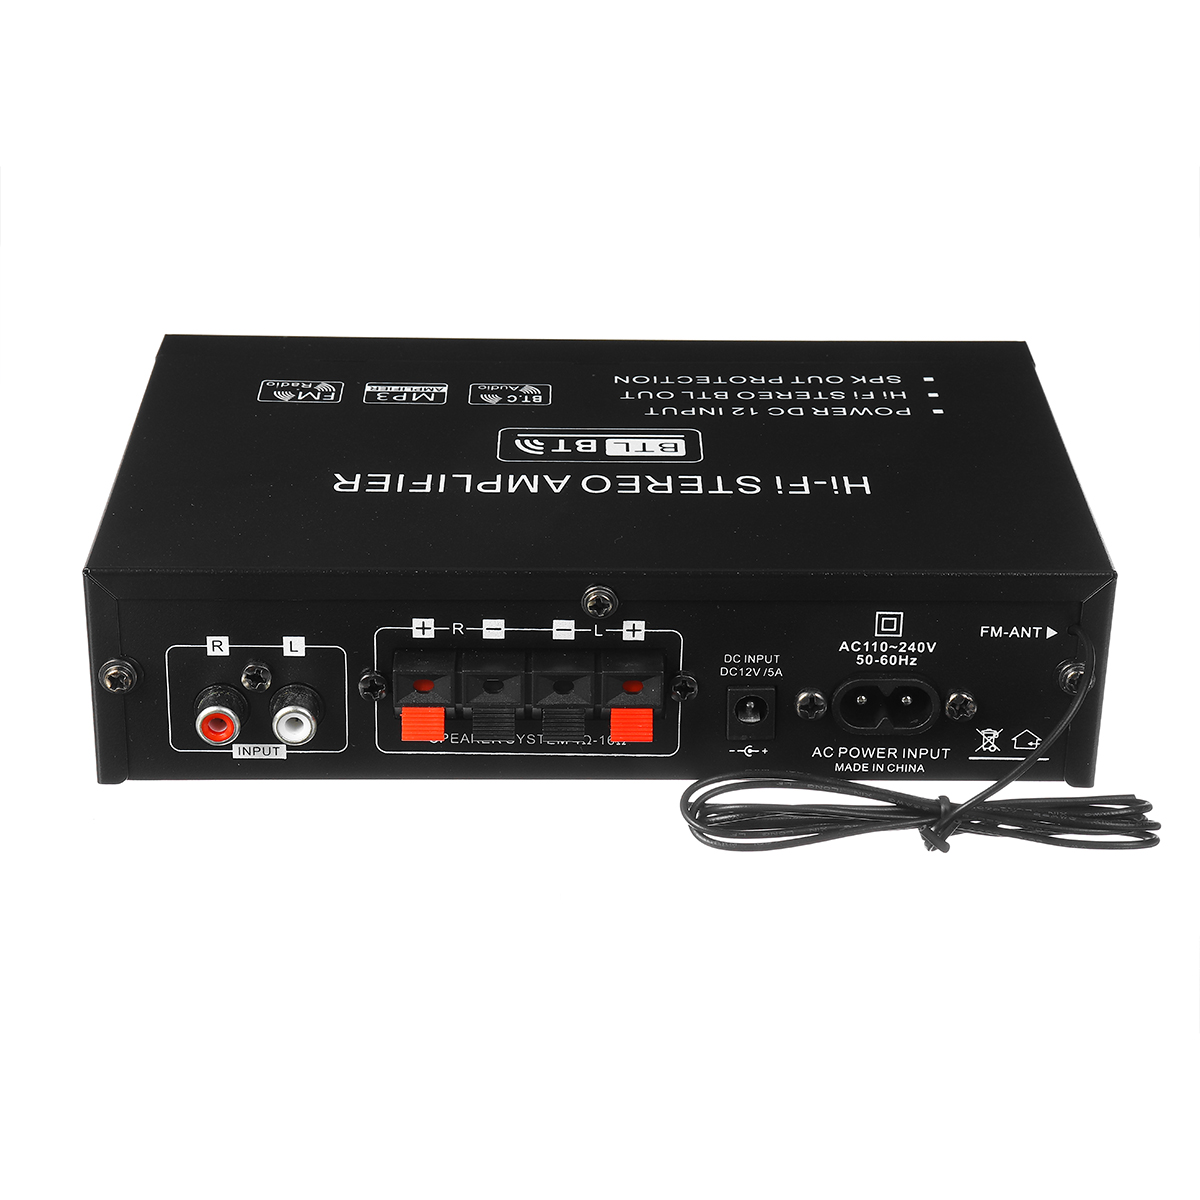 AK35 2X30W Digital HIFI Power Amplifier Bluetooth 5.0 USB FM TF Card Stereo Home Theater Car Audio 110V 220V AMP with Remote Control